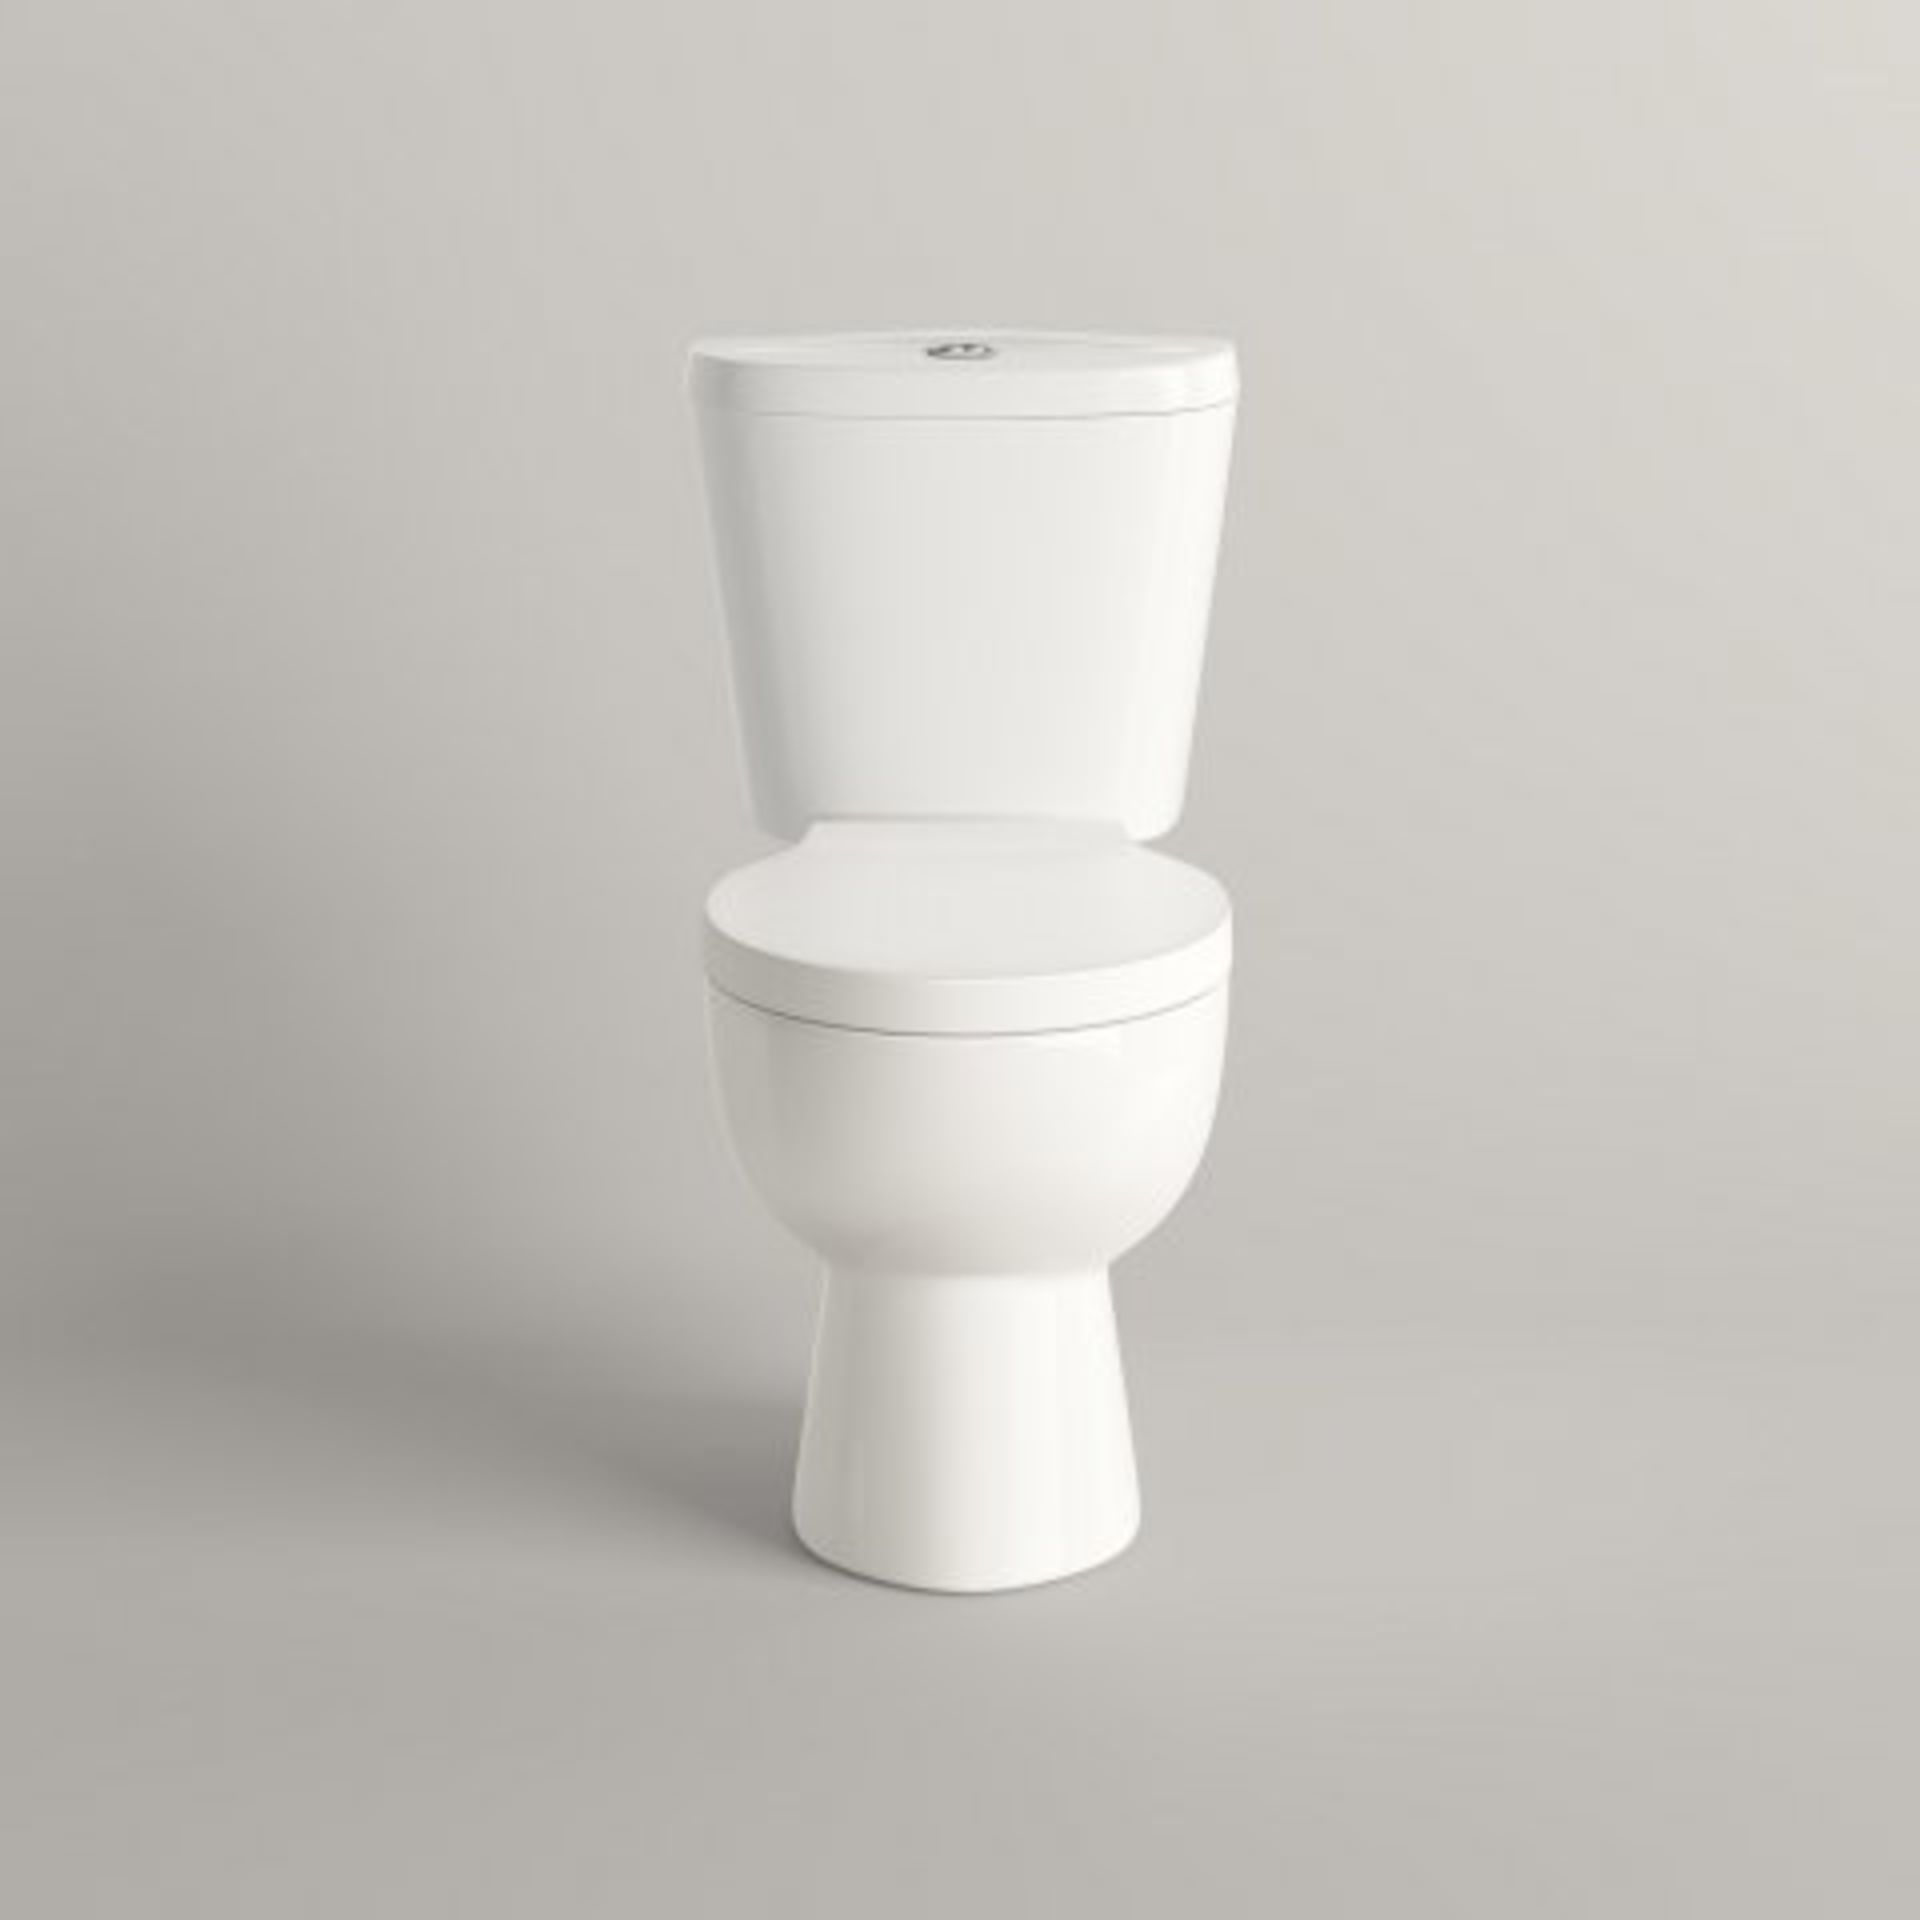 (L140) Mondella Maestro Close Coupled Toilet inc Soft Close Seat. RRP £399.99. Long Lasting - Image 3 of 3